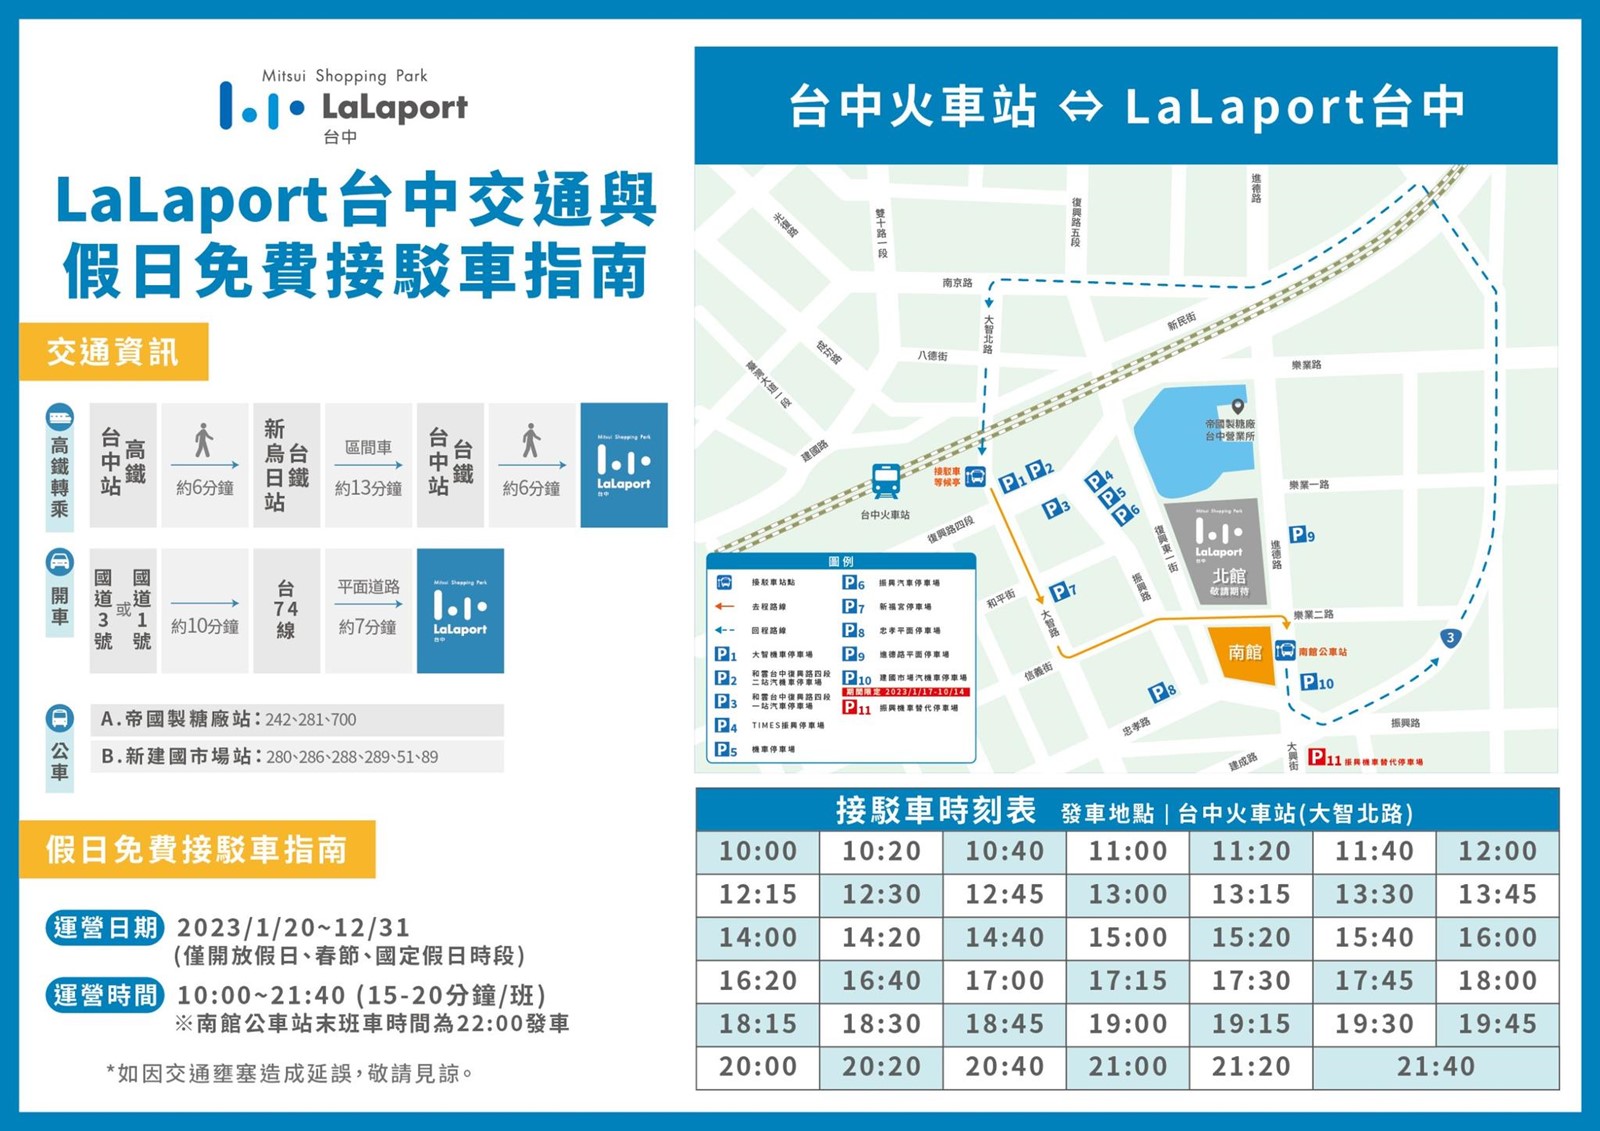 Mitsui Shopping Park LaLaport 台中來了！ 台中三井 LaLaport 完整開幕情報、接駁車、停車資訊懶人包看這裡 @巧莉的世界流浪筆記